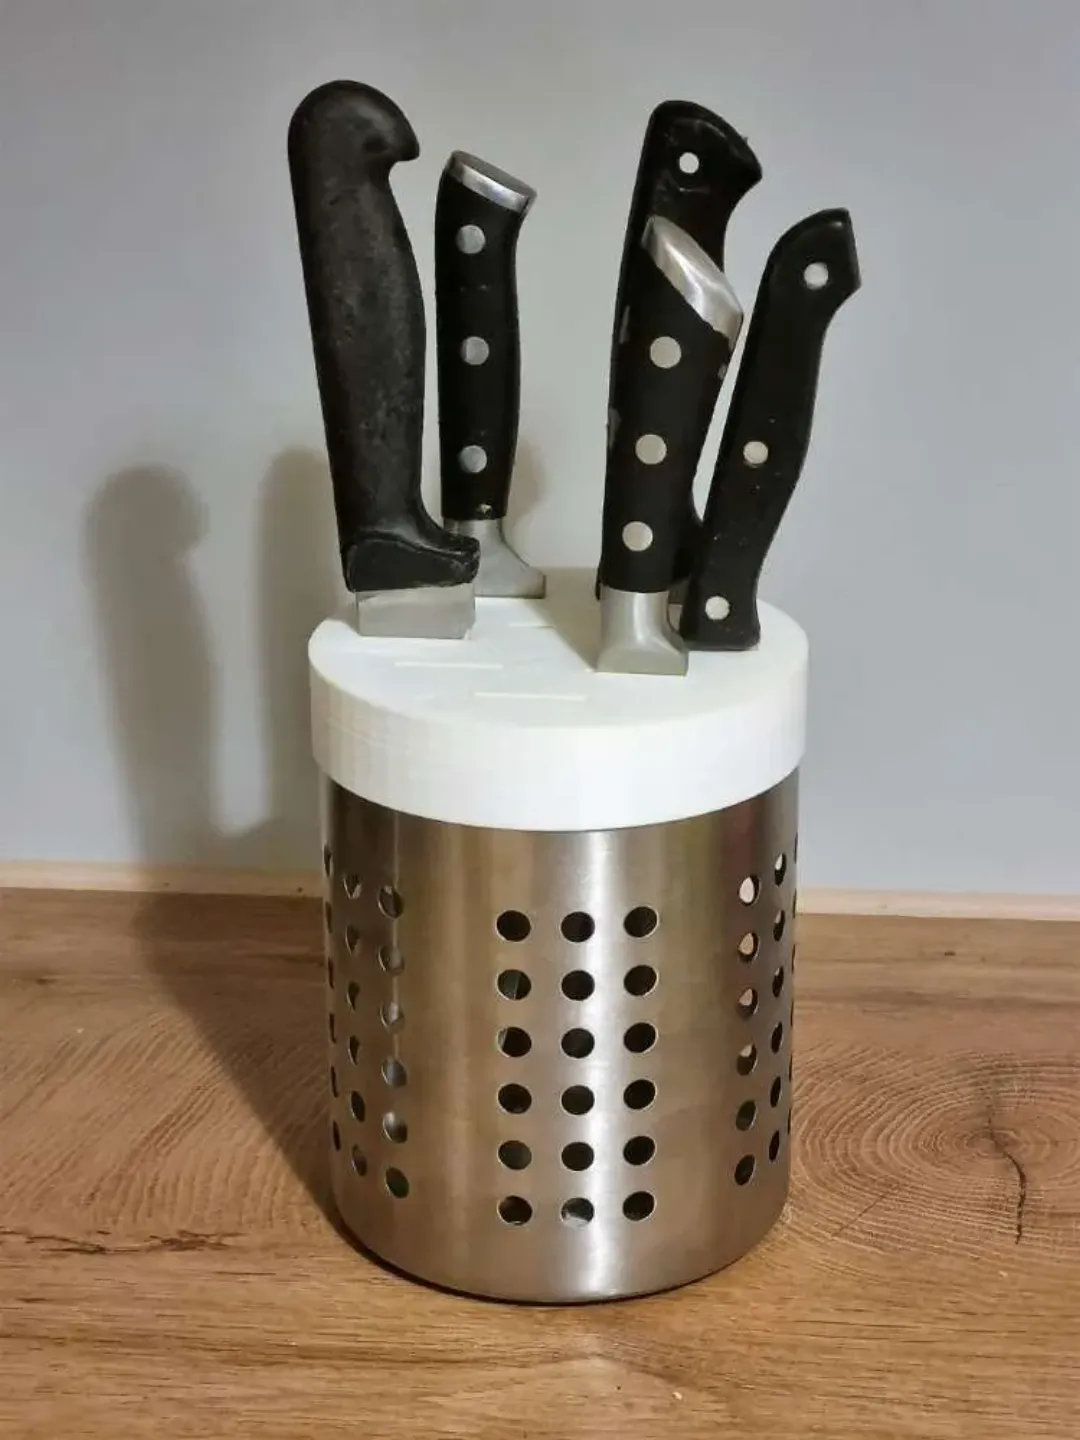 Knife holder add-on for IKEA ORDNING